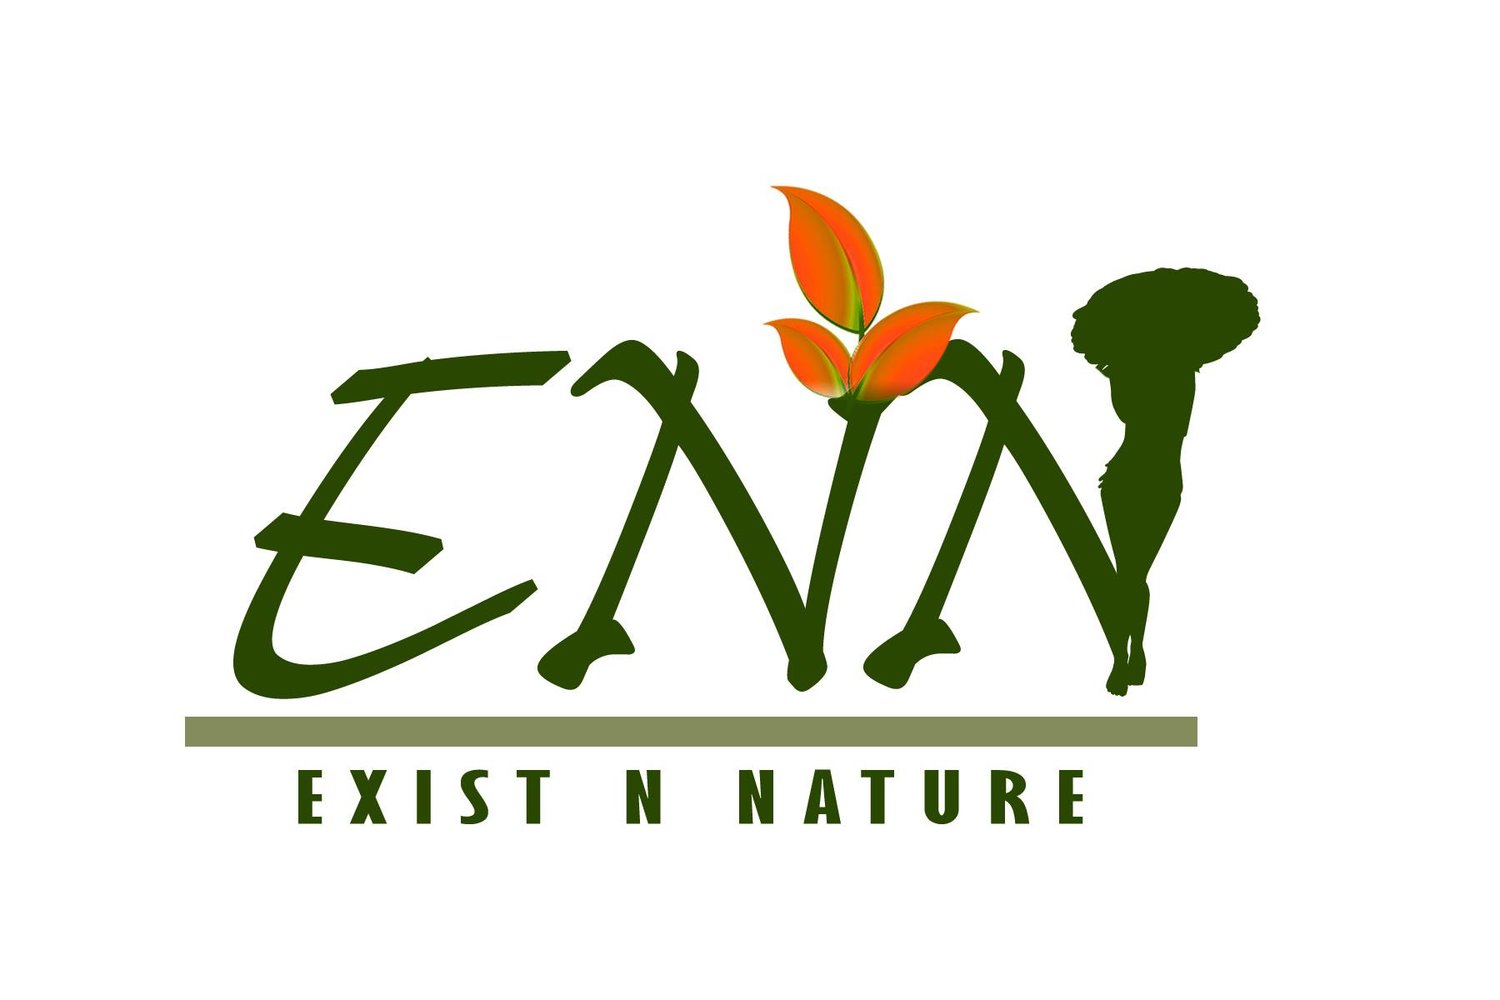 Wild nature Media с раковиной на логотипе.